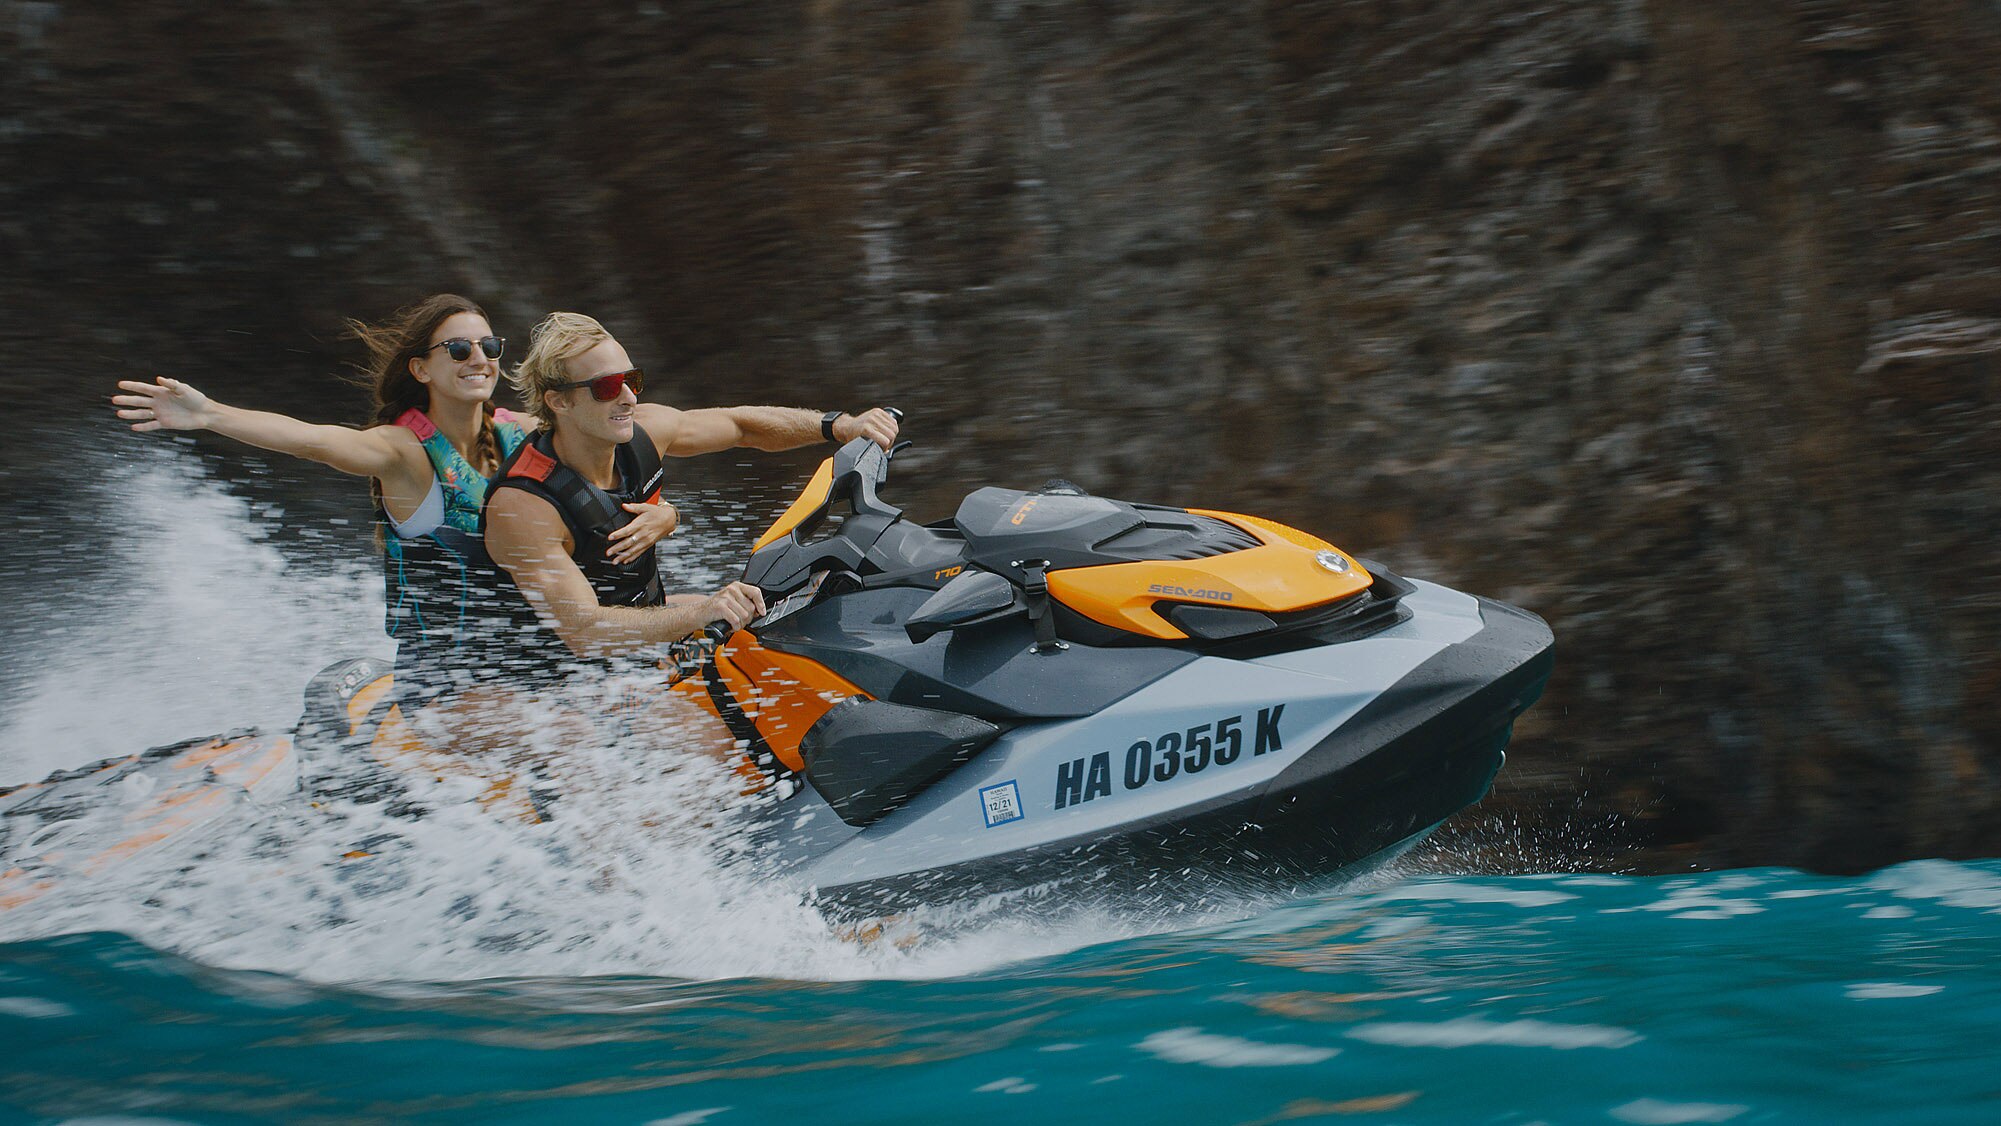 Chris Farro riding a Sea-Doo with his girlfriend